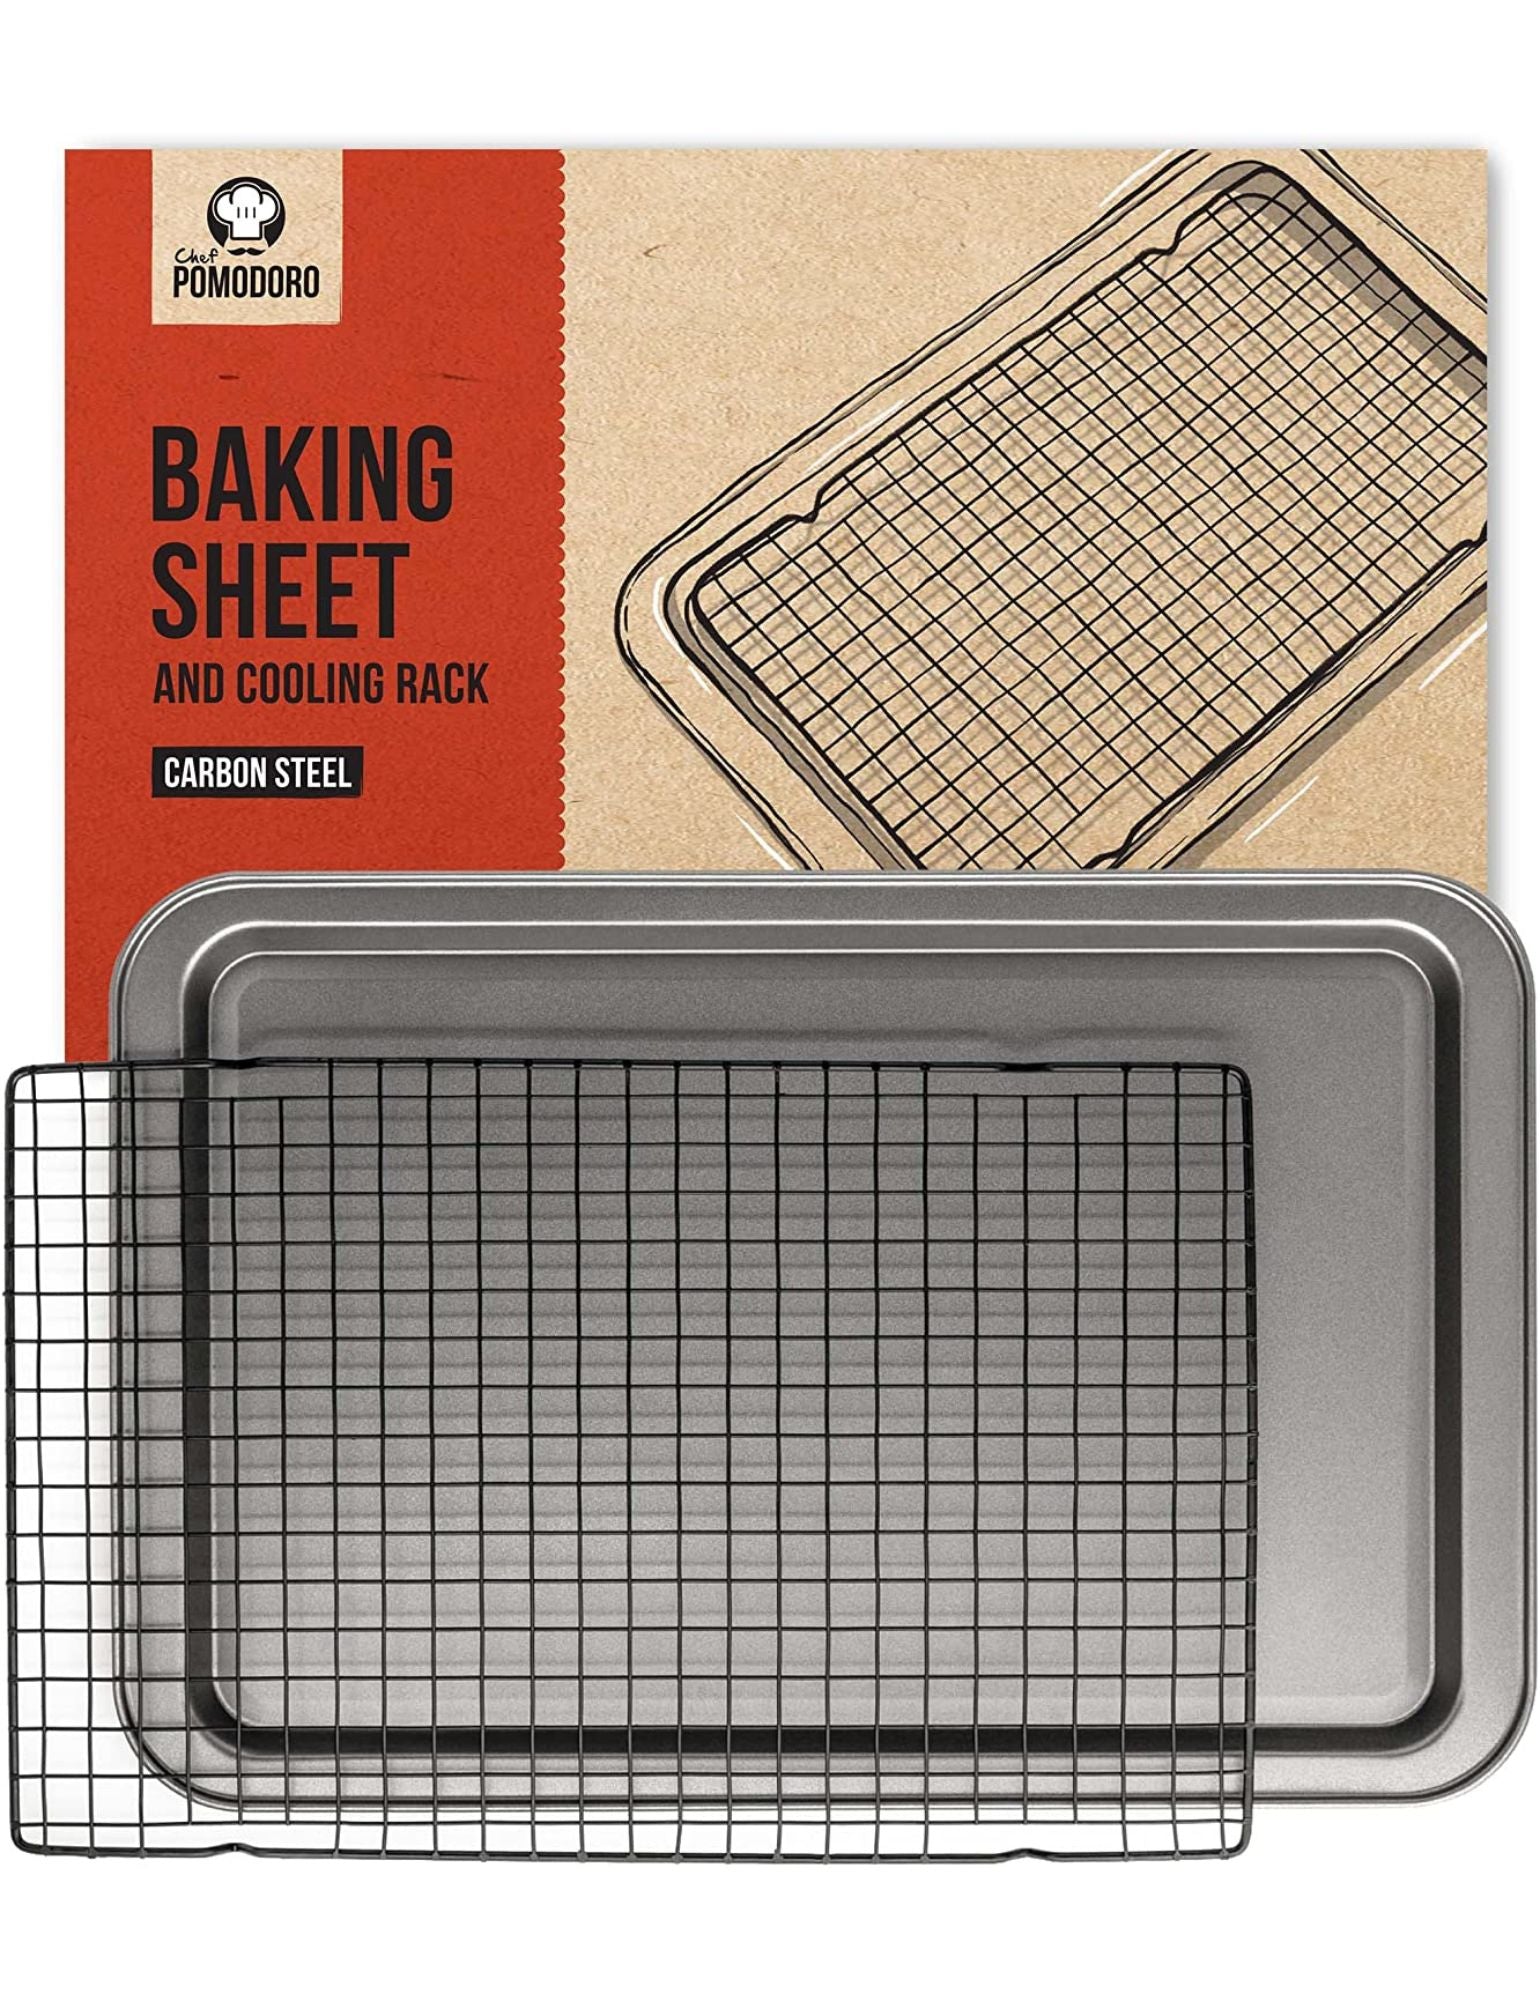 Oven-Safe Copper Crisper Tray Non-Stick Aluminum Oven Baking Sheet